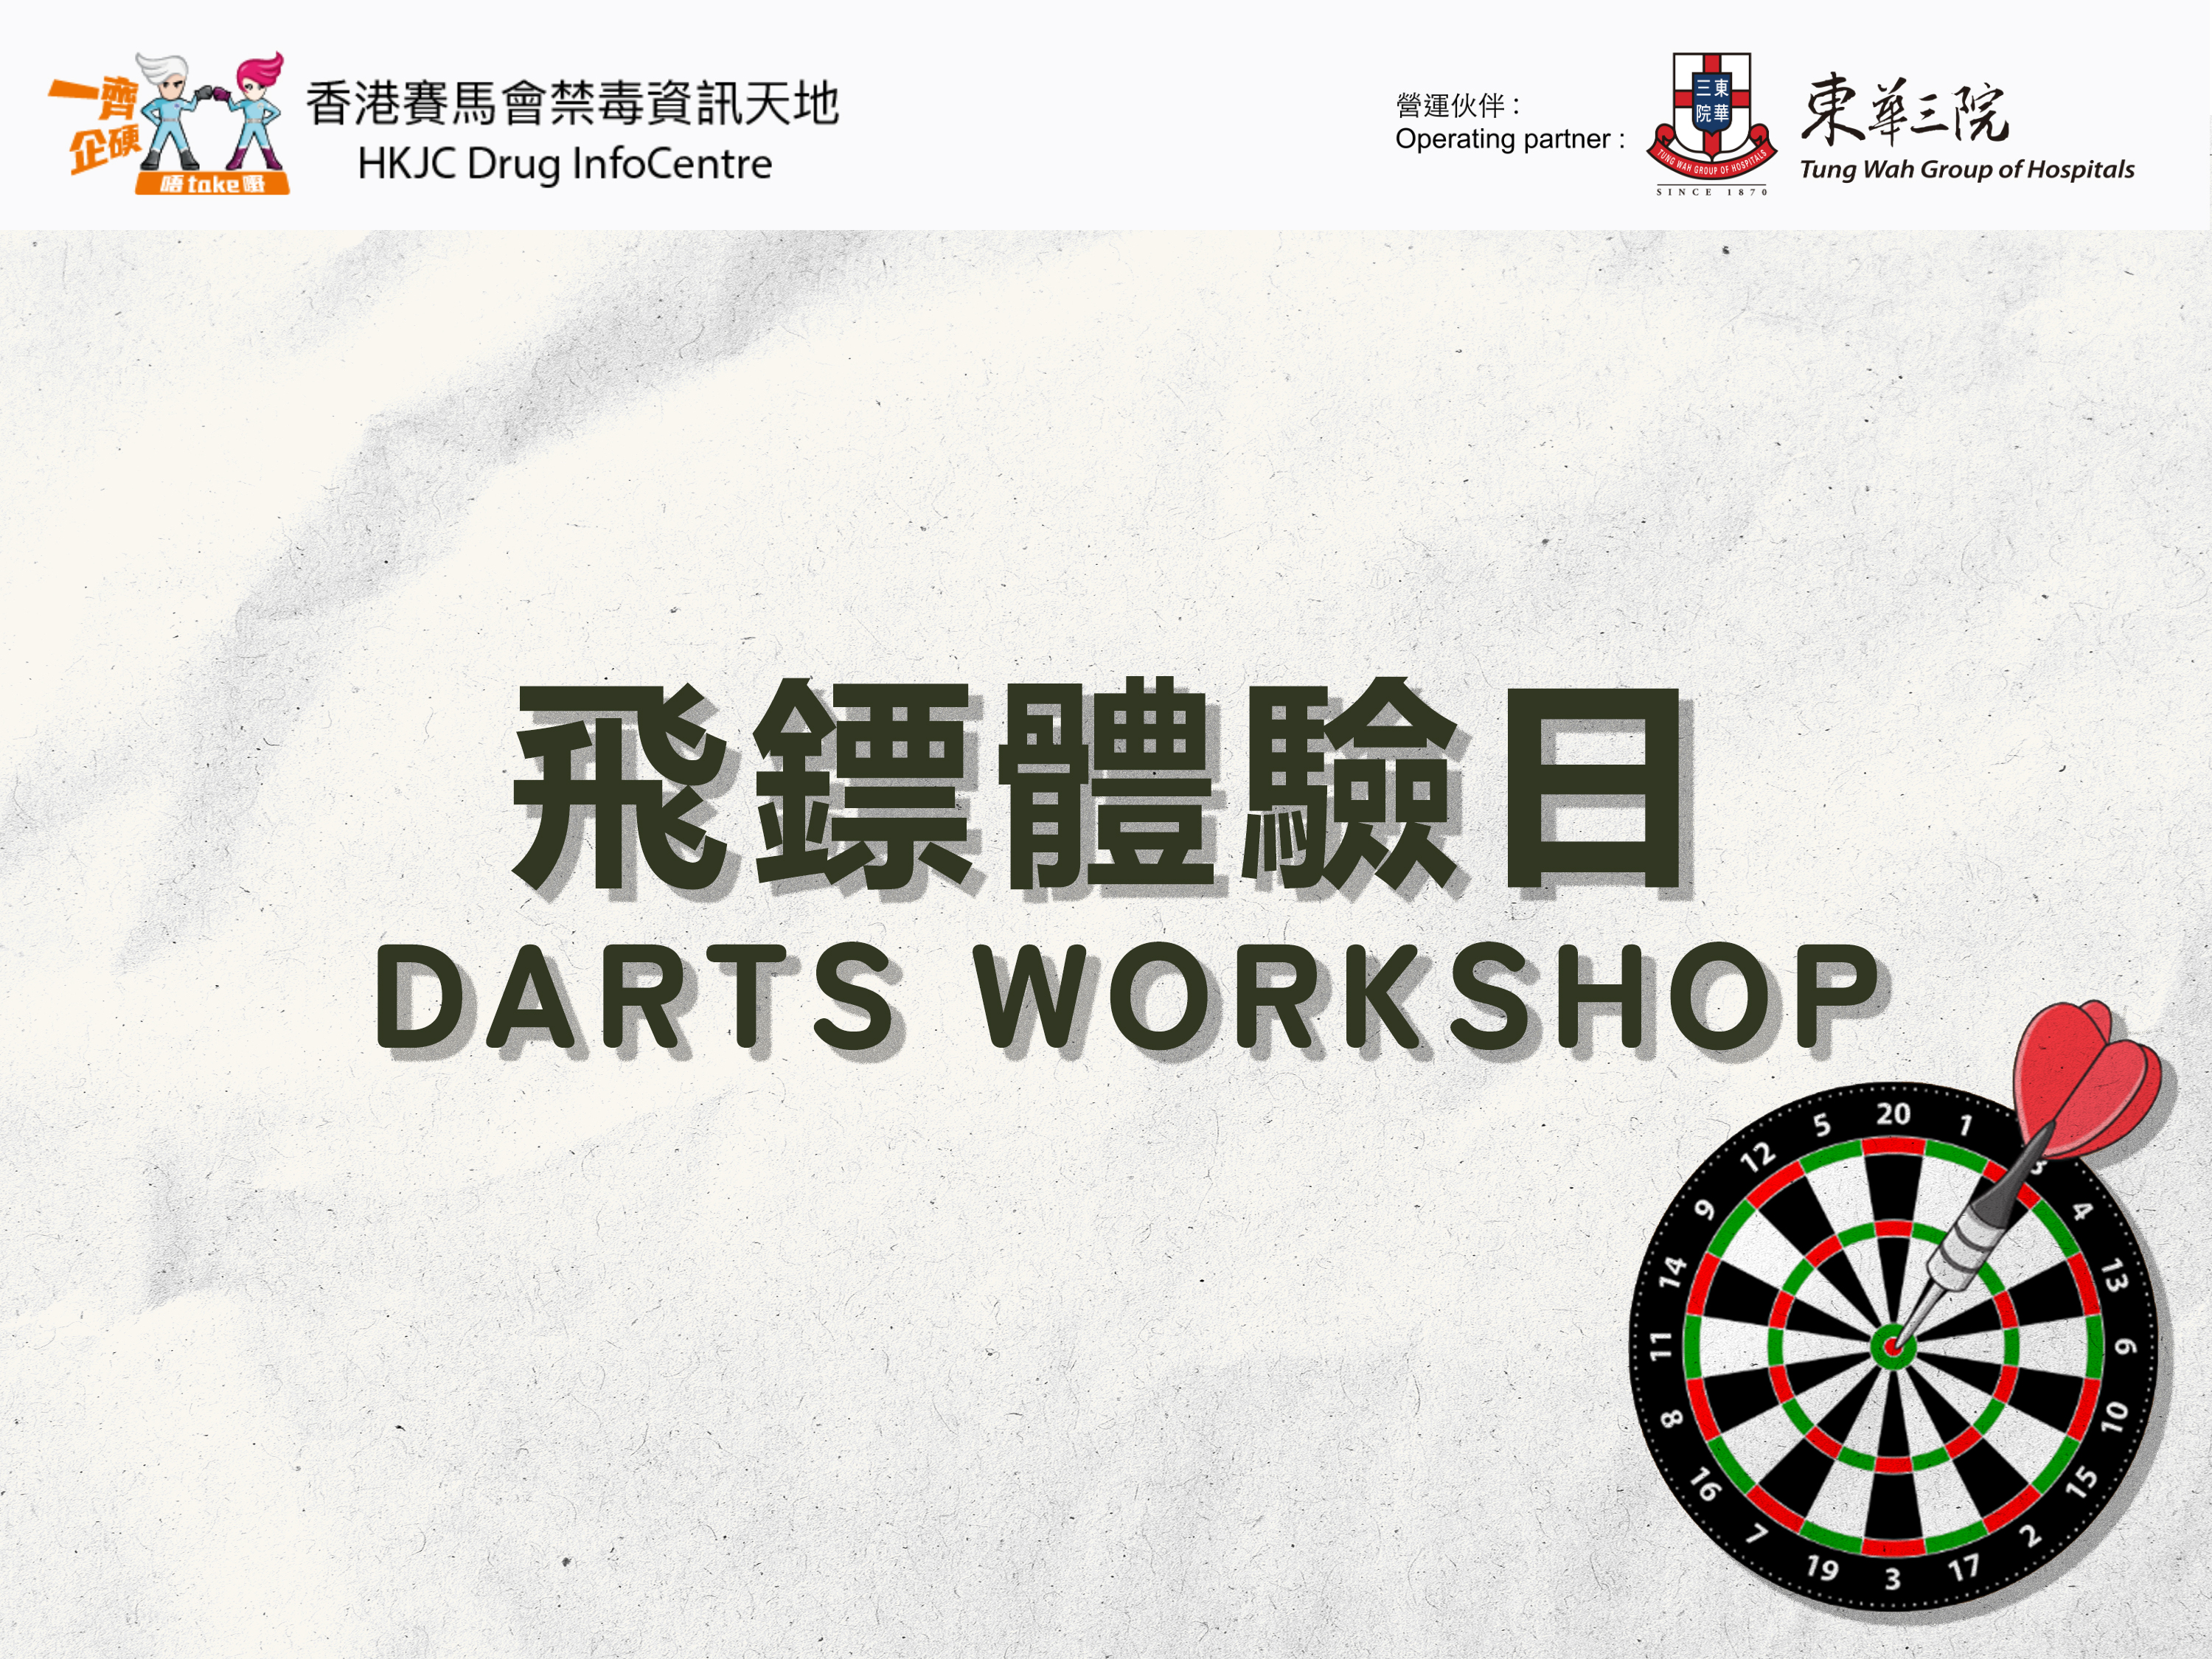 Darts Workshop